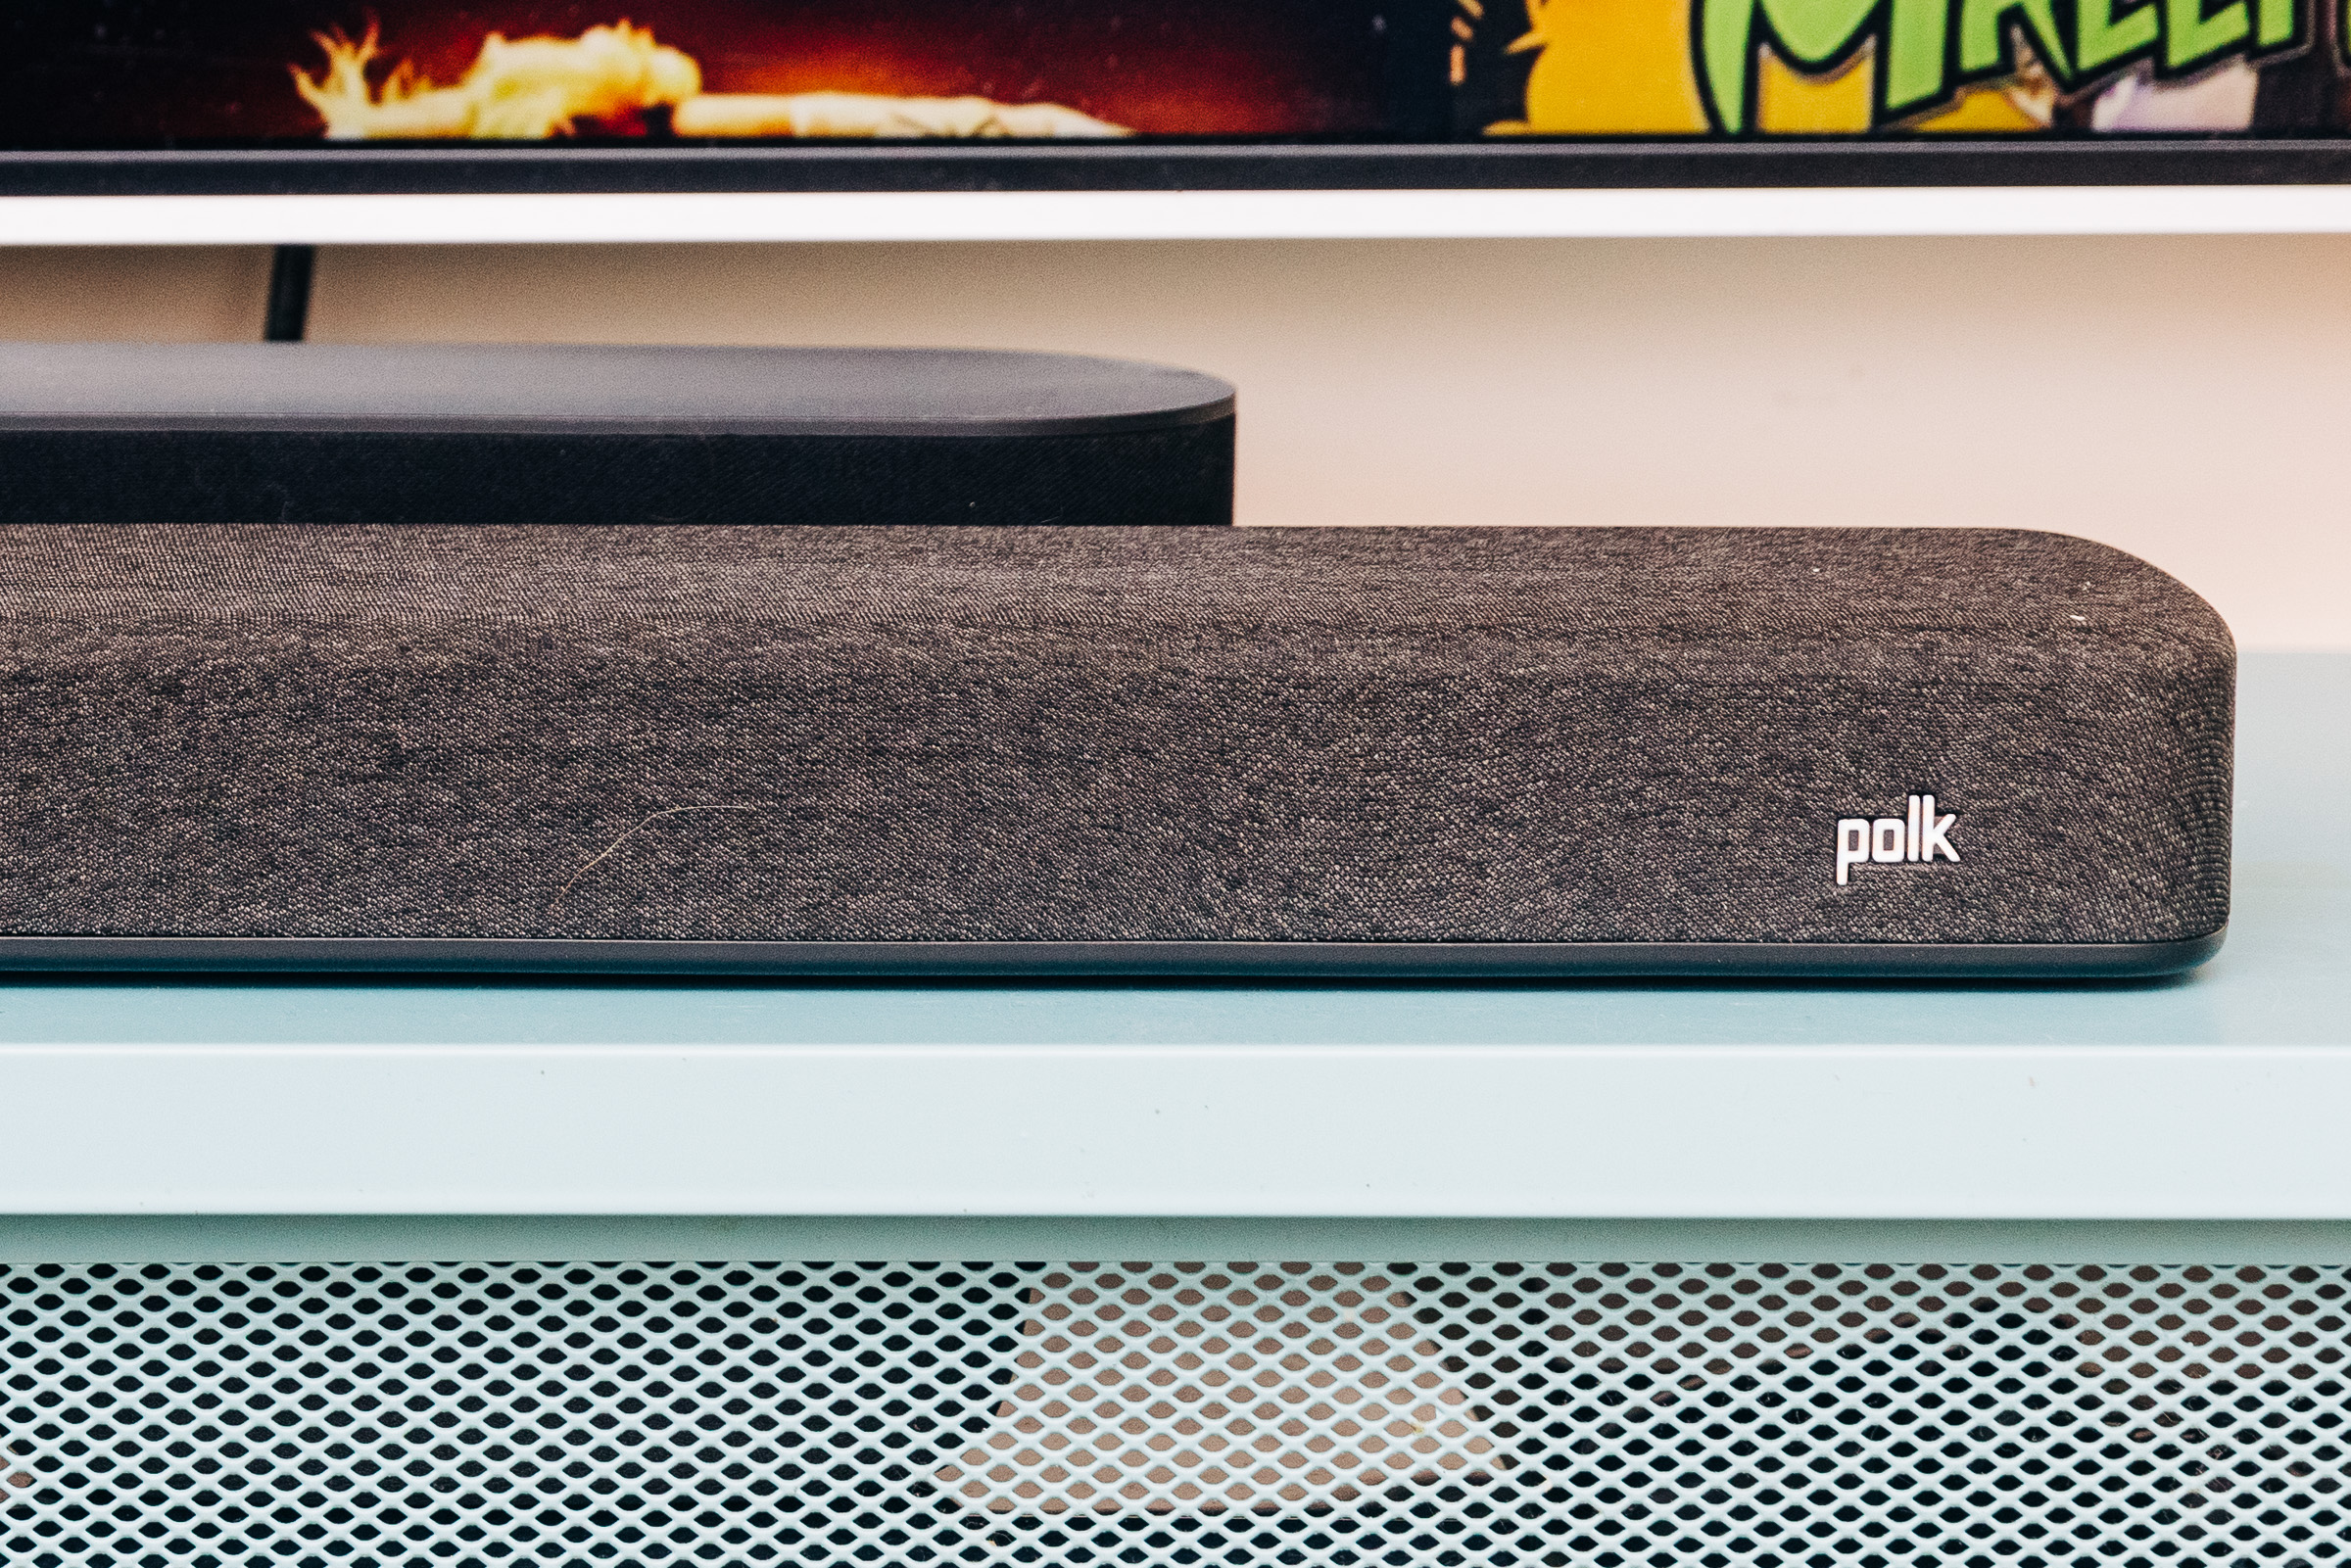 Polk React Soundbar review: Alexa’s favorite affordable audio upgrade